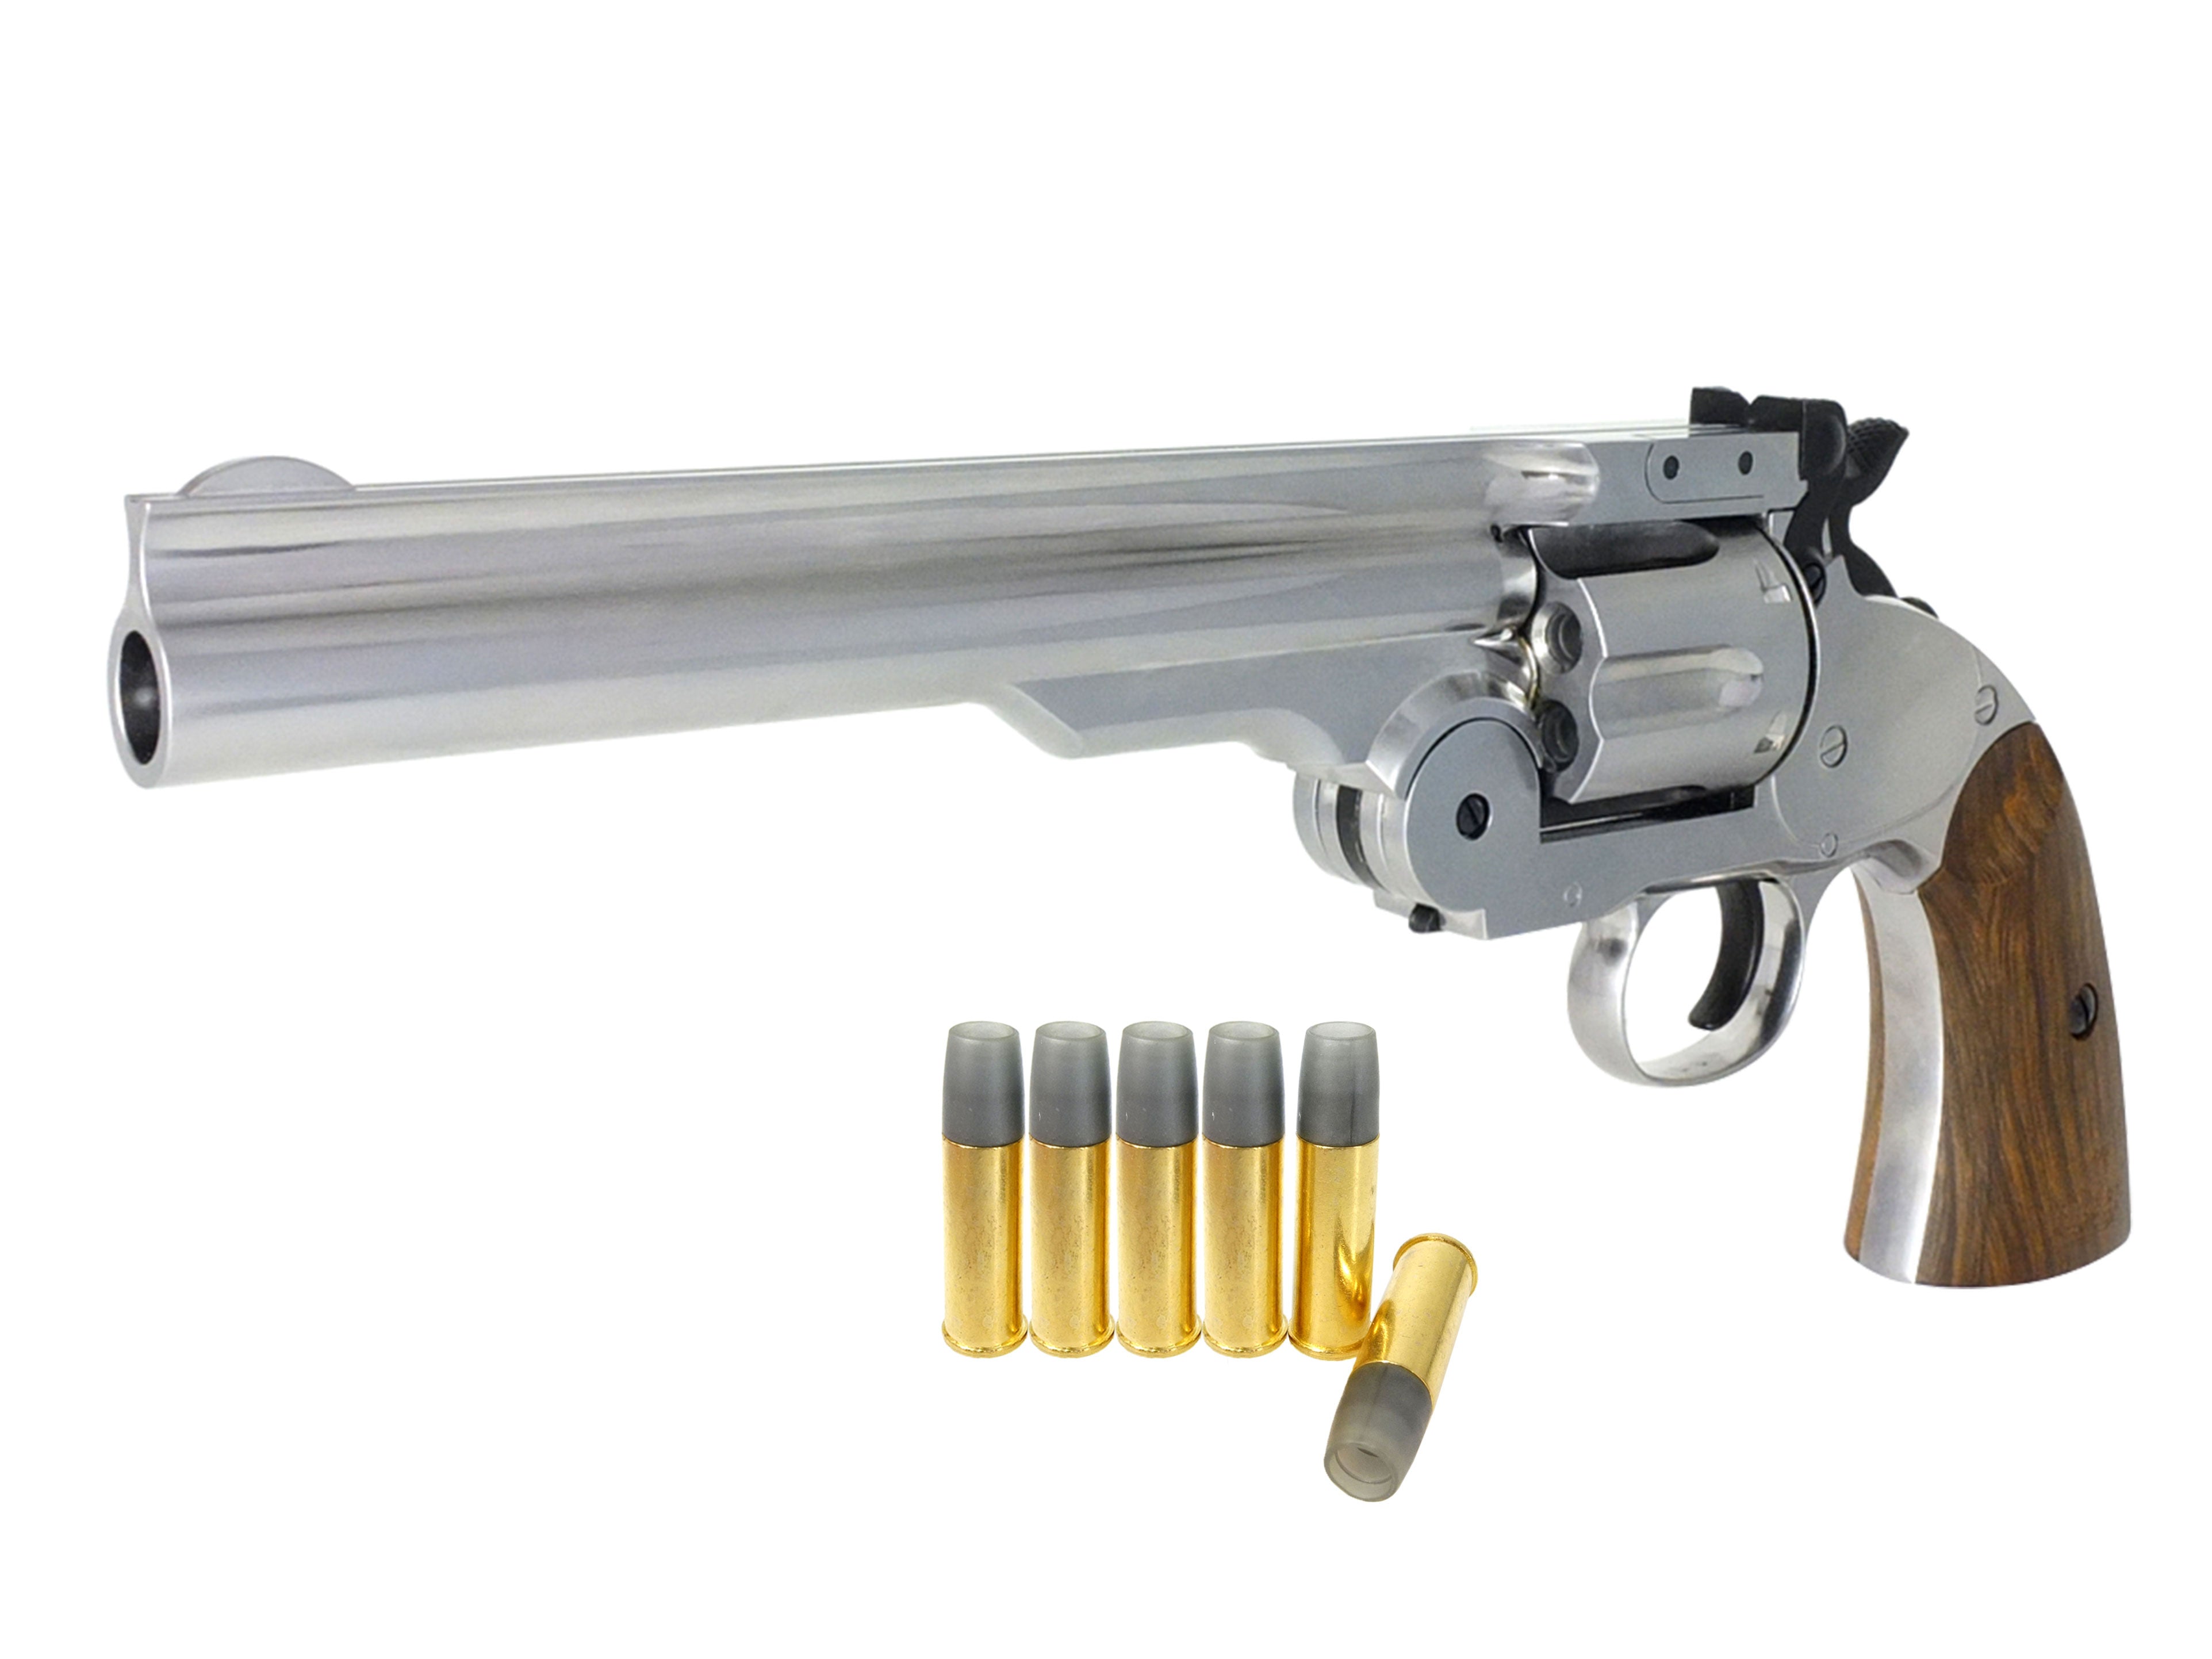 GUN HEAVEN S&W Model 3 1877 スコフィールド Schofield CO2ガス